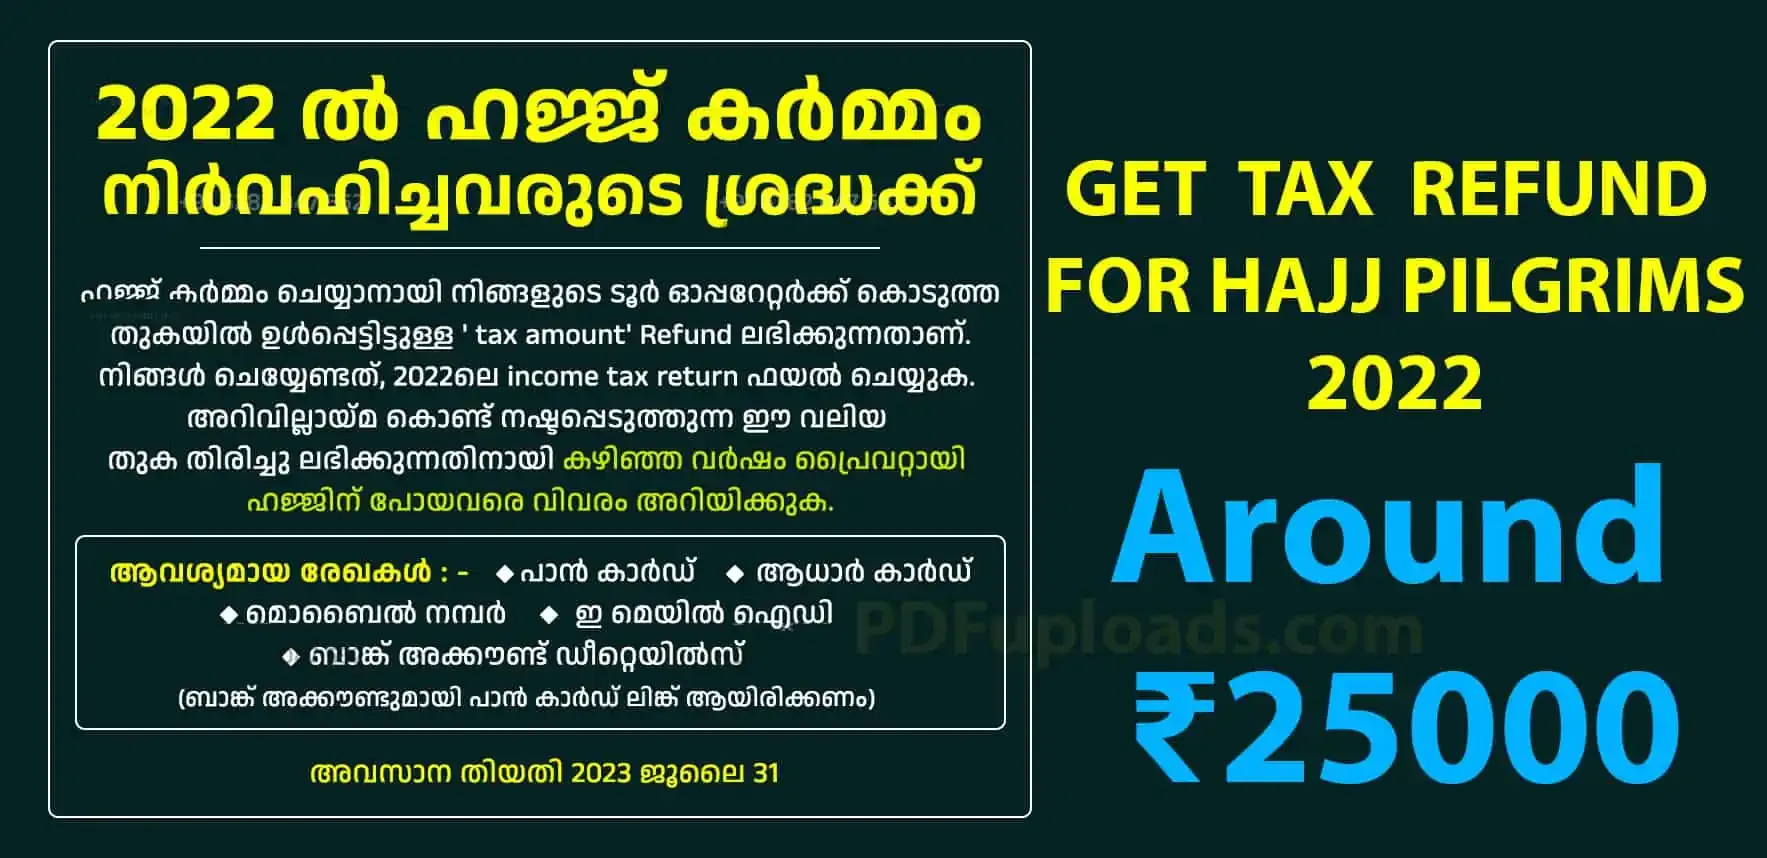 Tax Refund for Hajj Pilgrims 2022 - Around Rs.25000